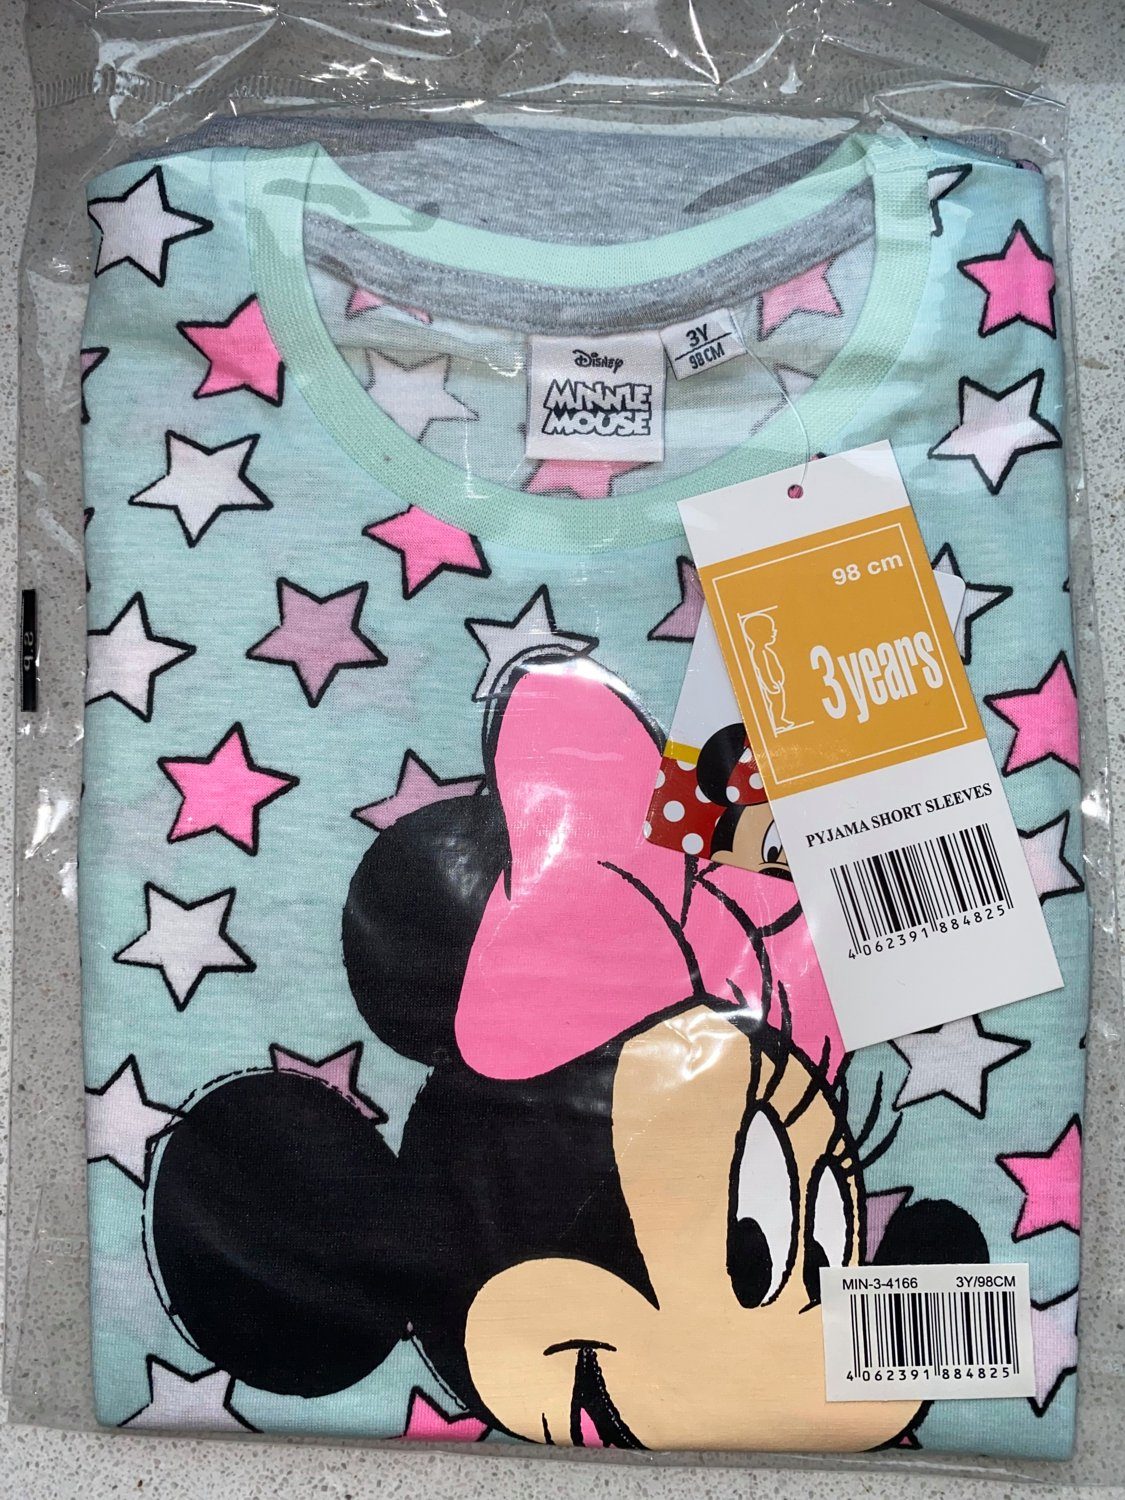 104 Minnie Mouse Kinderpyjama 116 cm kurz Pyjama 128 T-Sirt Mouse mit Schlafanzug Jahre 110 ShortY Hose Minnie Pyjama 3 6 4 Pyjama Weiß + Mädchen 8 5 Hose Disney 98